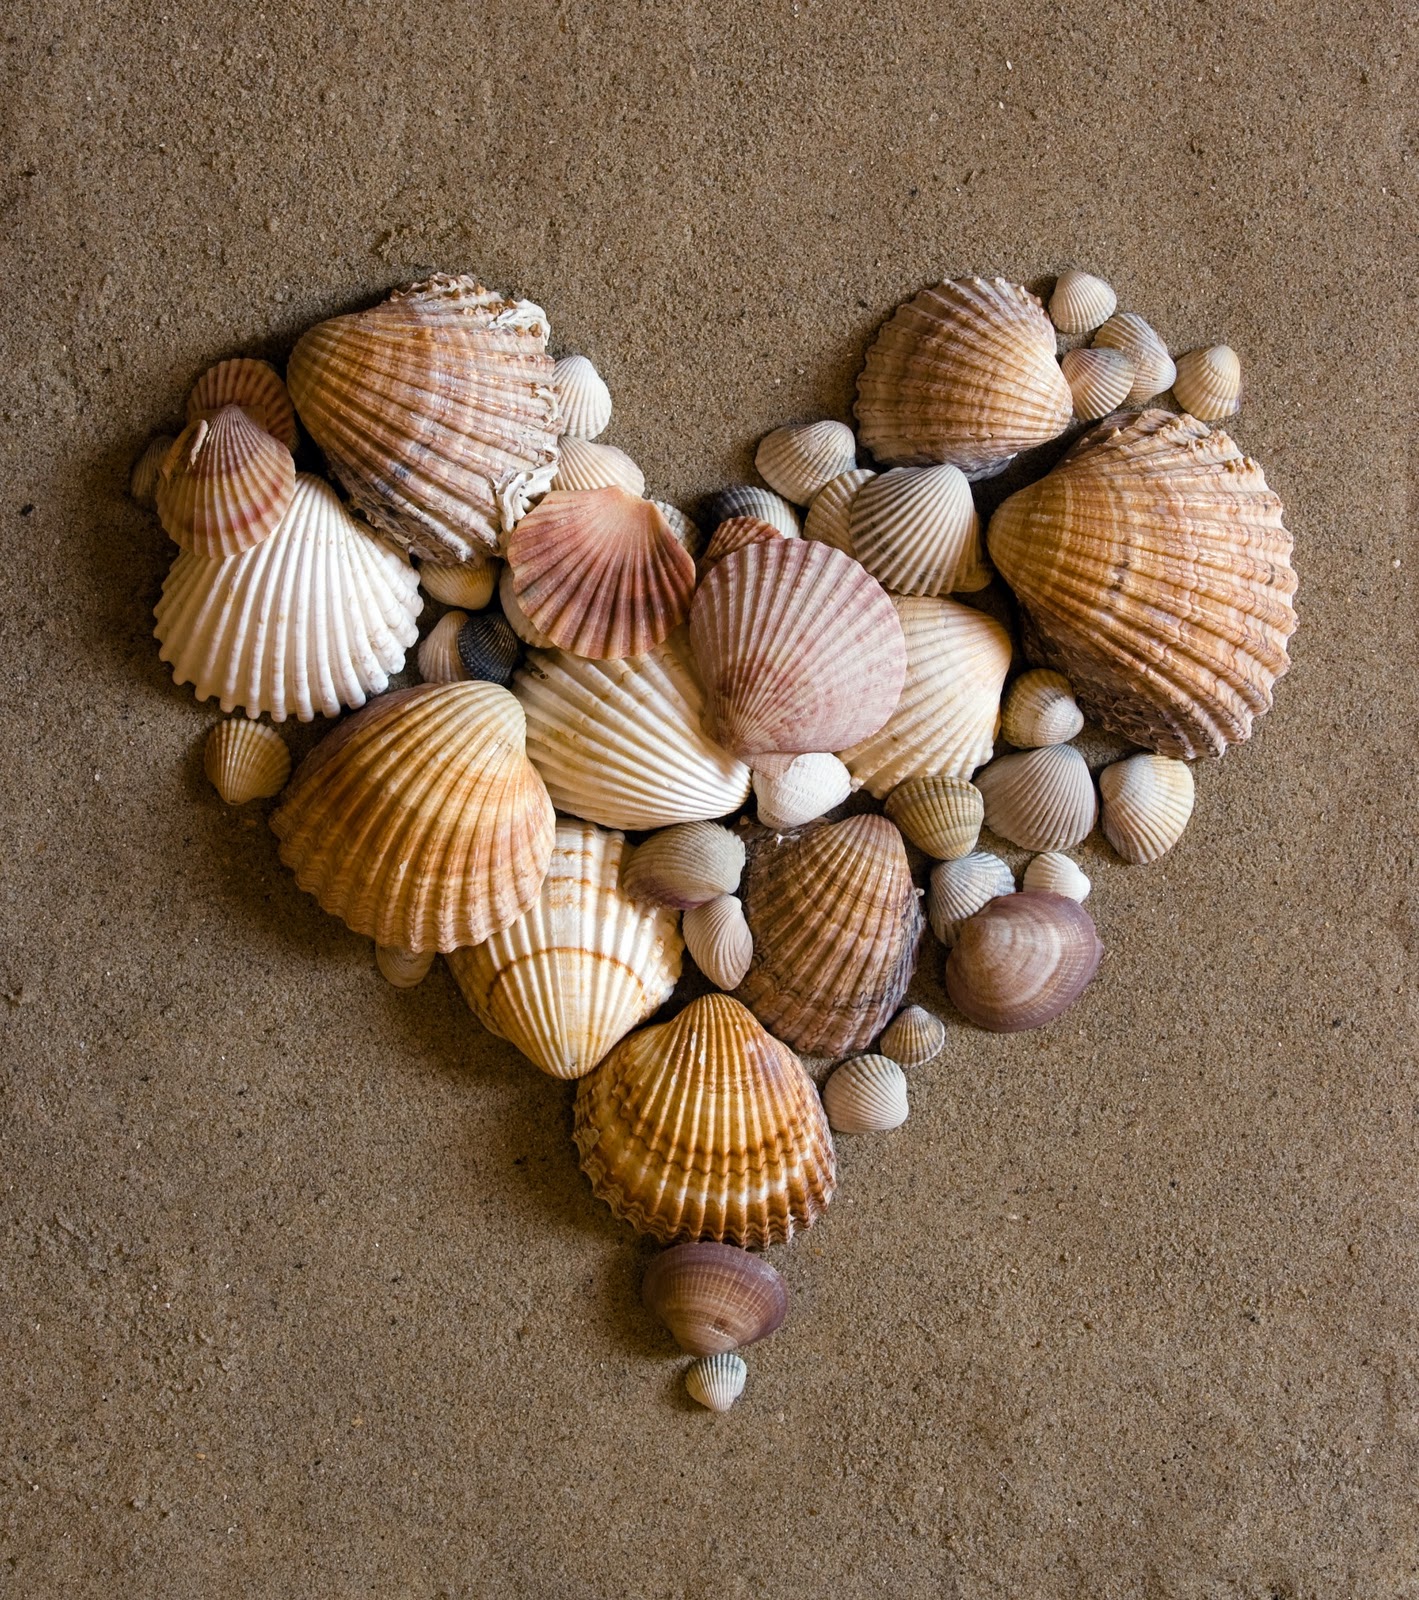 Splendid Design: Decorating with sea shells